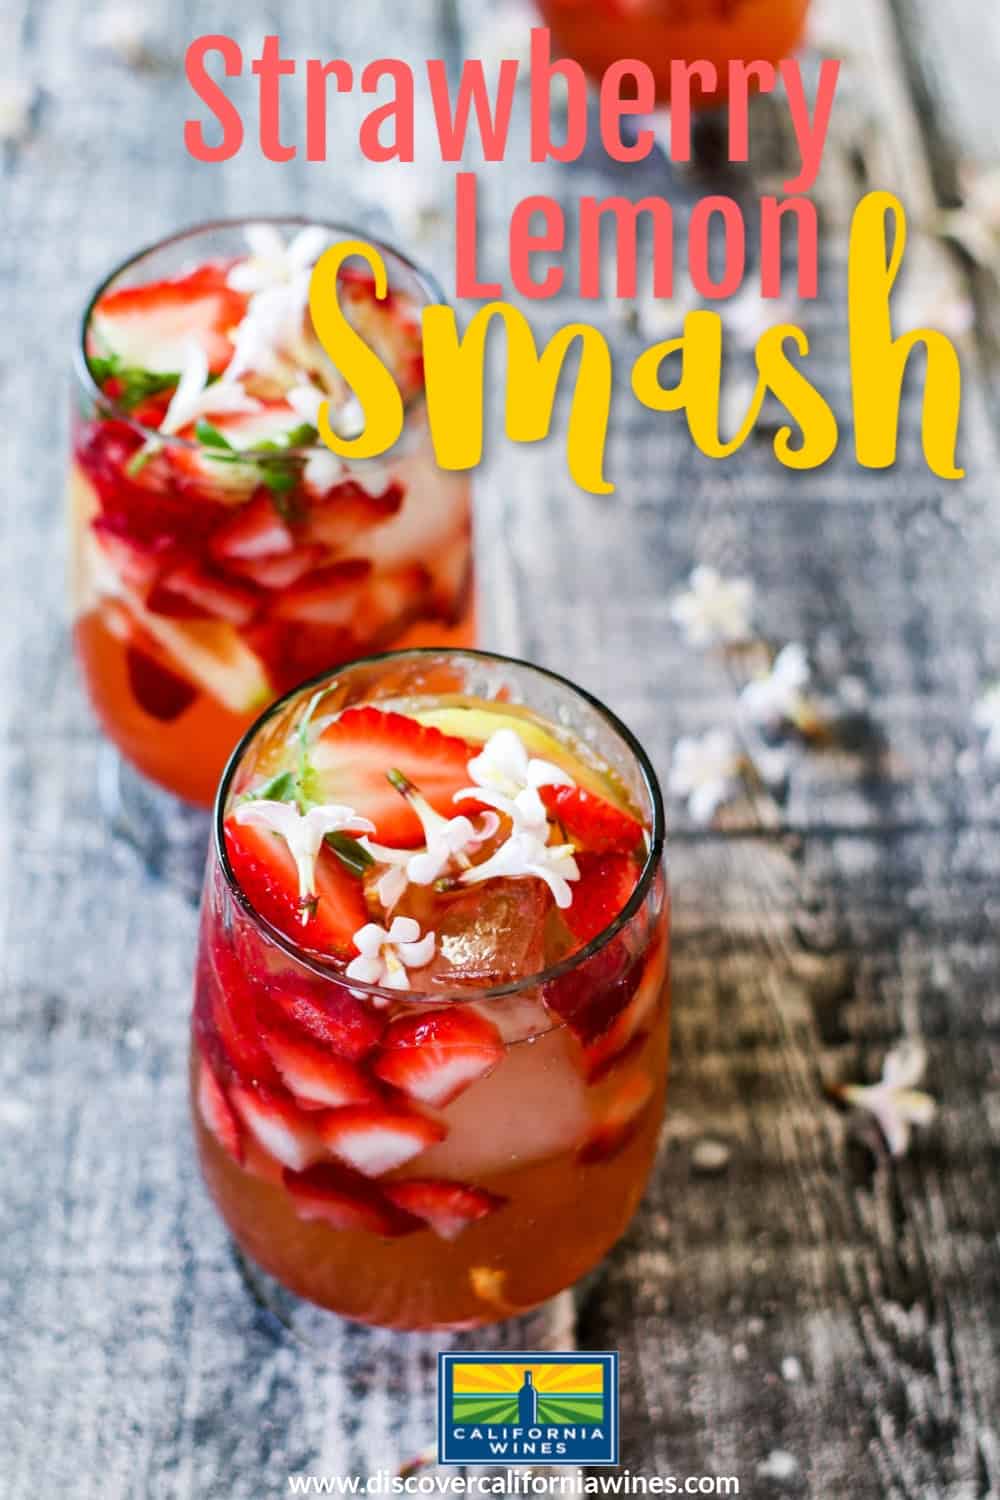 Strawberry Lemon Smash Cocktail from California Wines